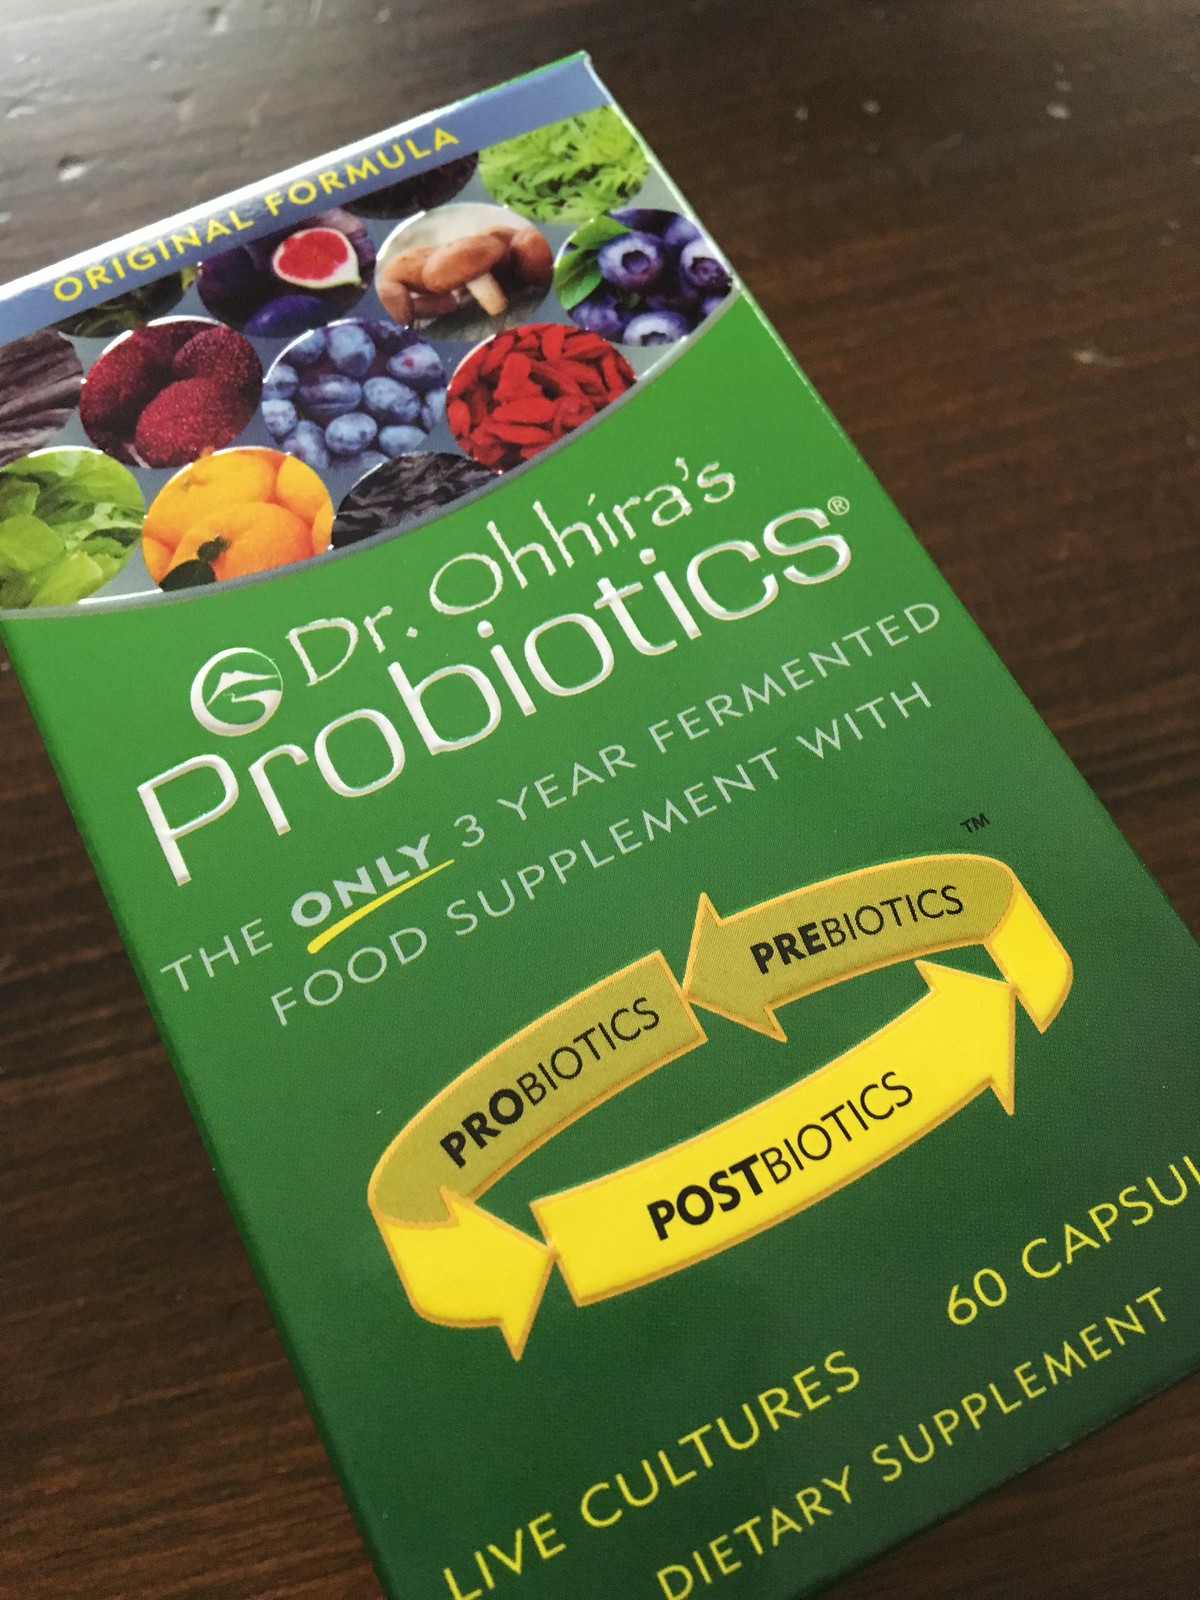 Prebiotics, PRObiotics, and POSTbiotics with Dr. Ohhira’s Probiotics